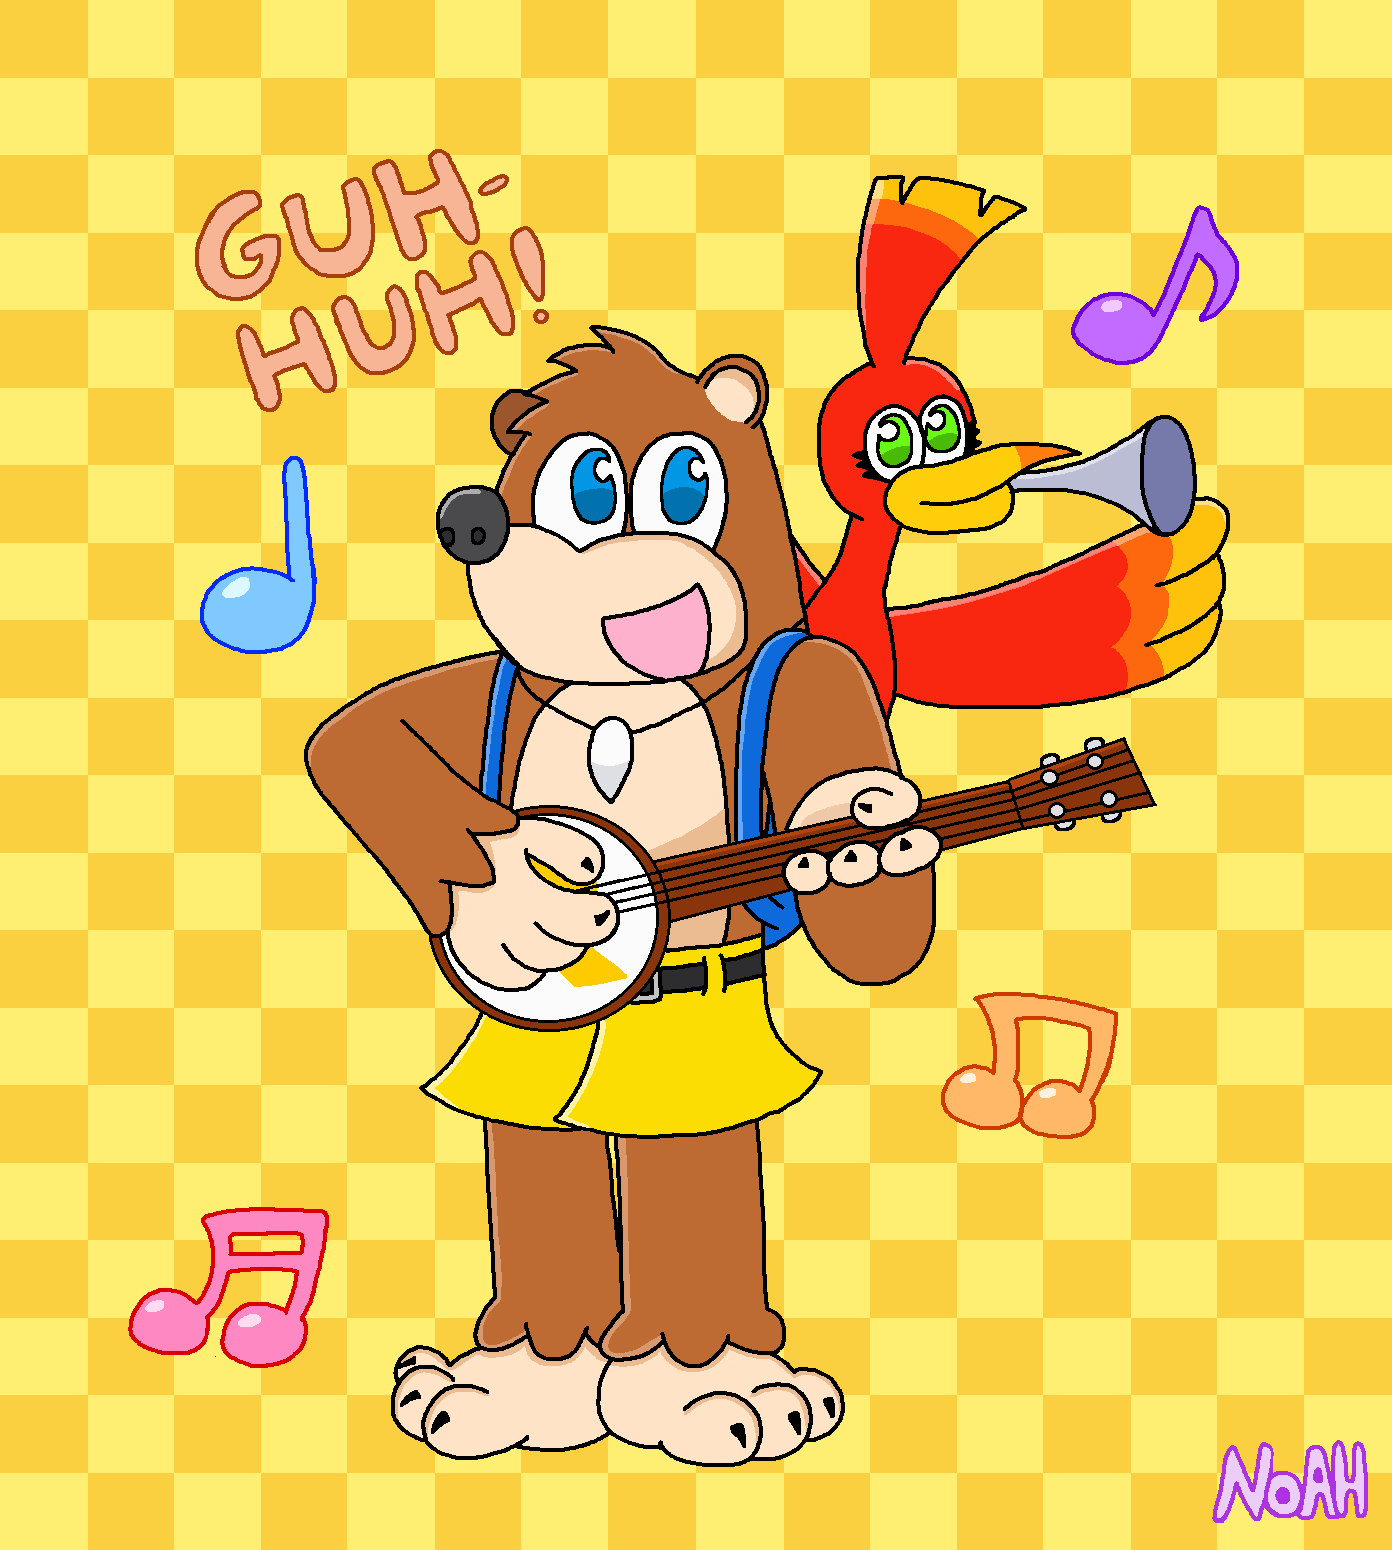 Banjo and Kazooie play Guitar Hero by anime_dragon_tamer - Fanart